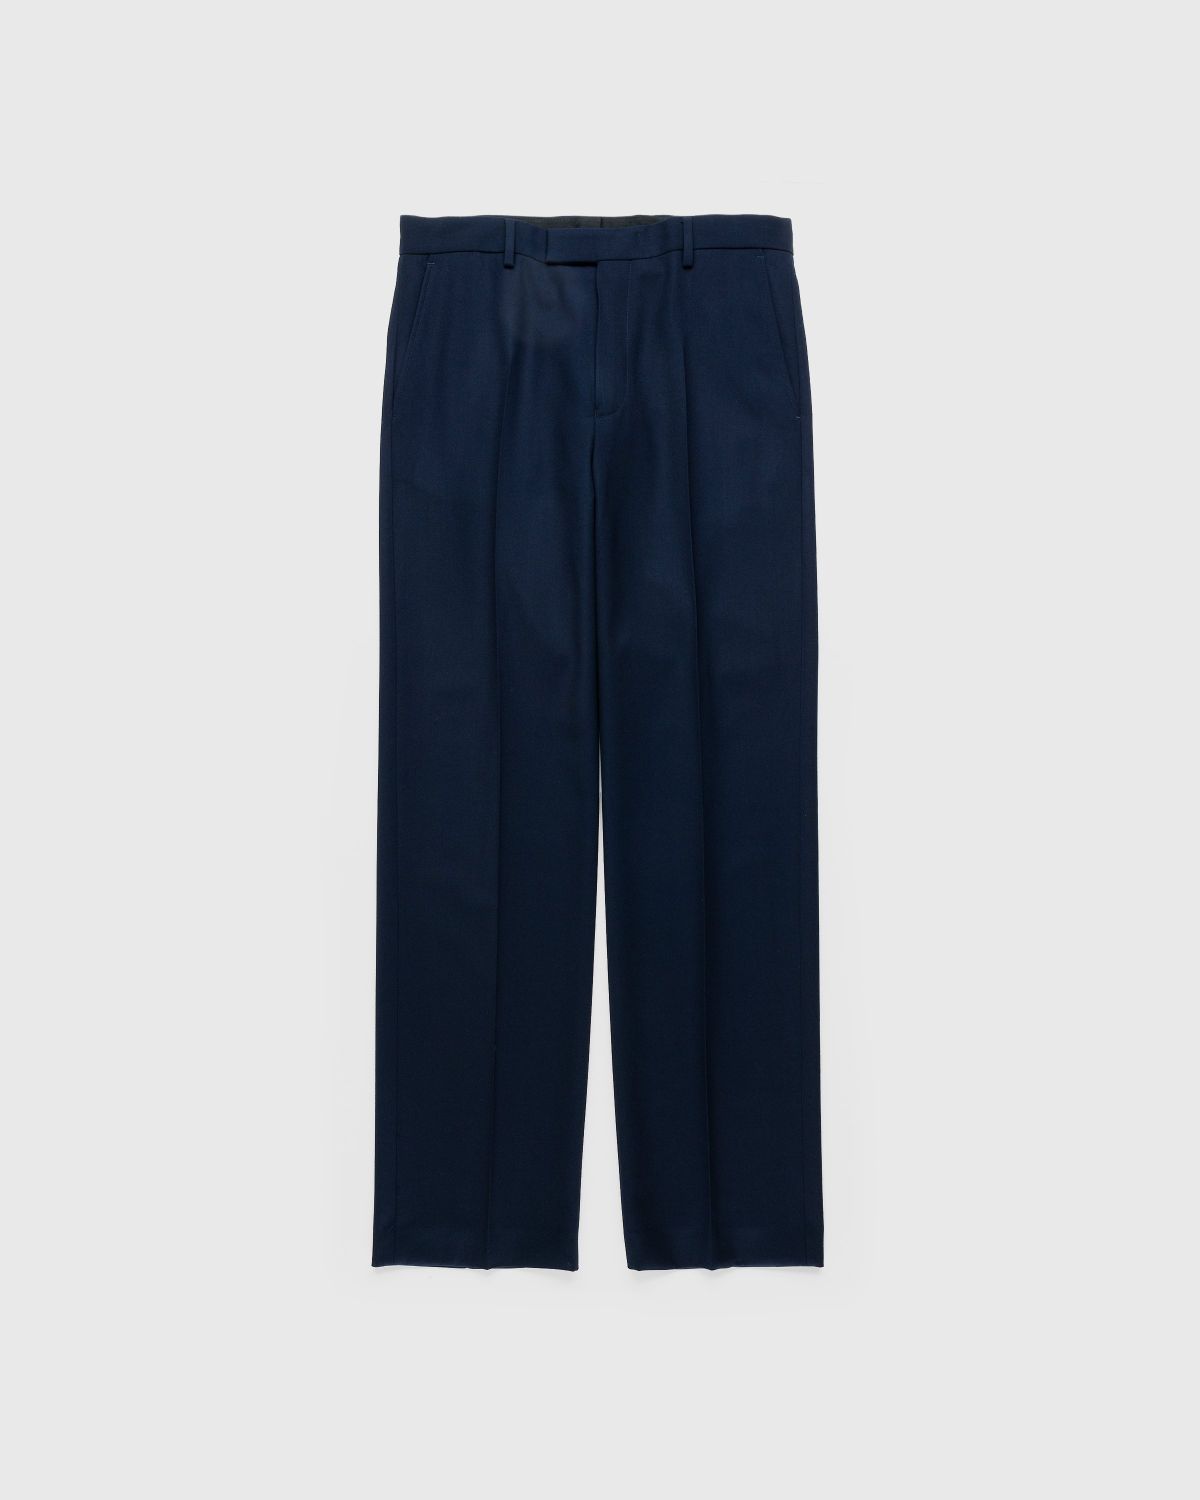 Dries van Noten – Pinnet Long Pants Blue - Pants - Blue - Image 1